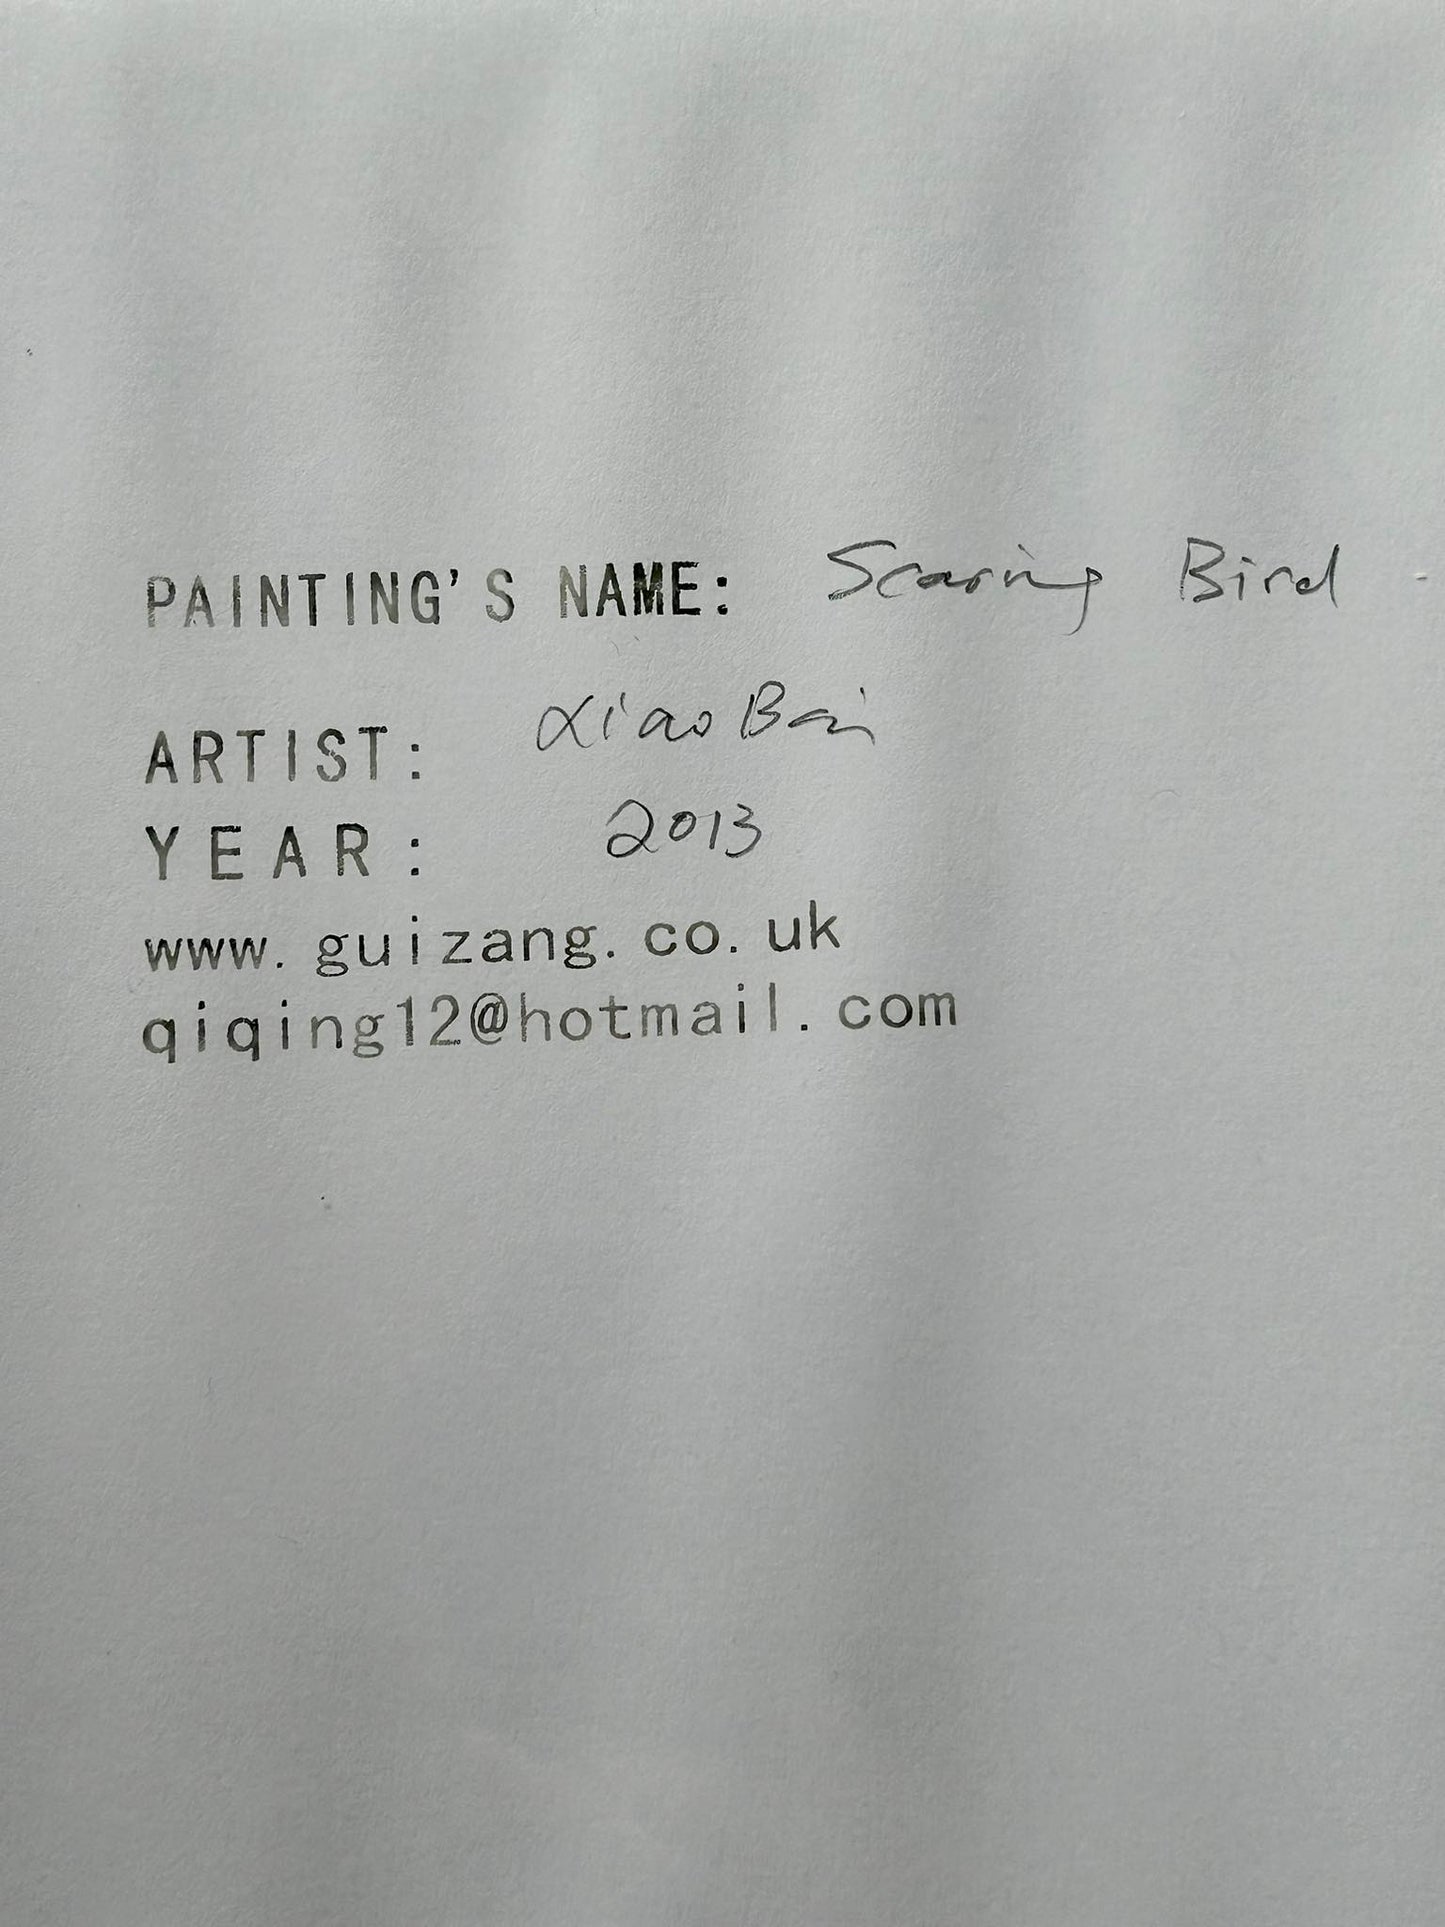 Xiao Bai Art Scaring Bird 2013